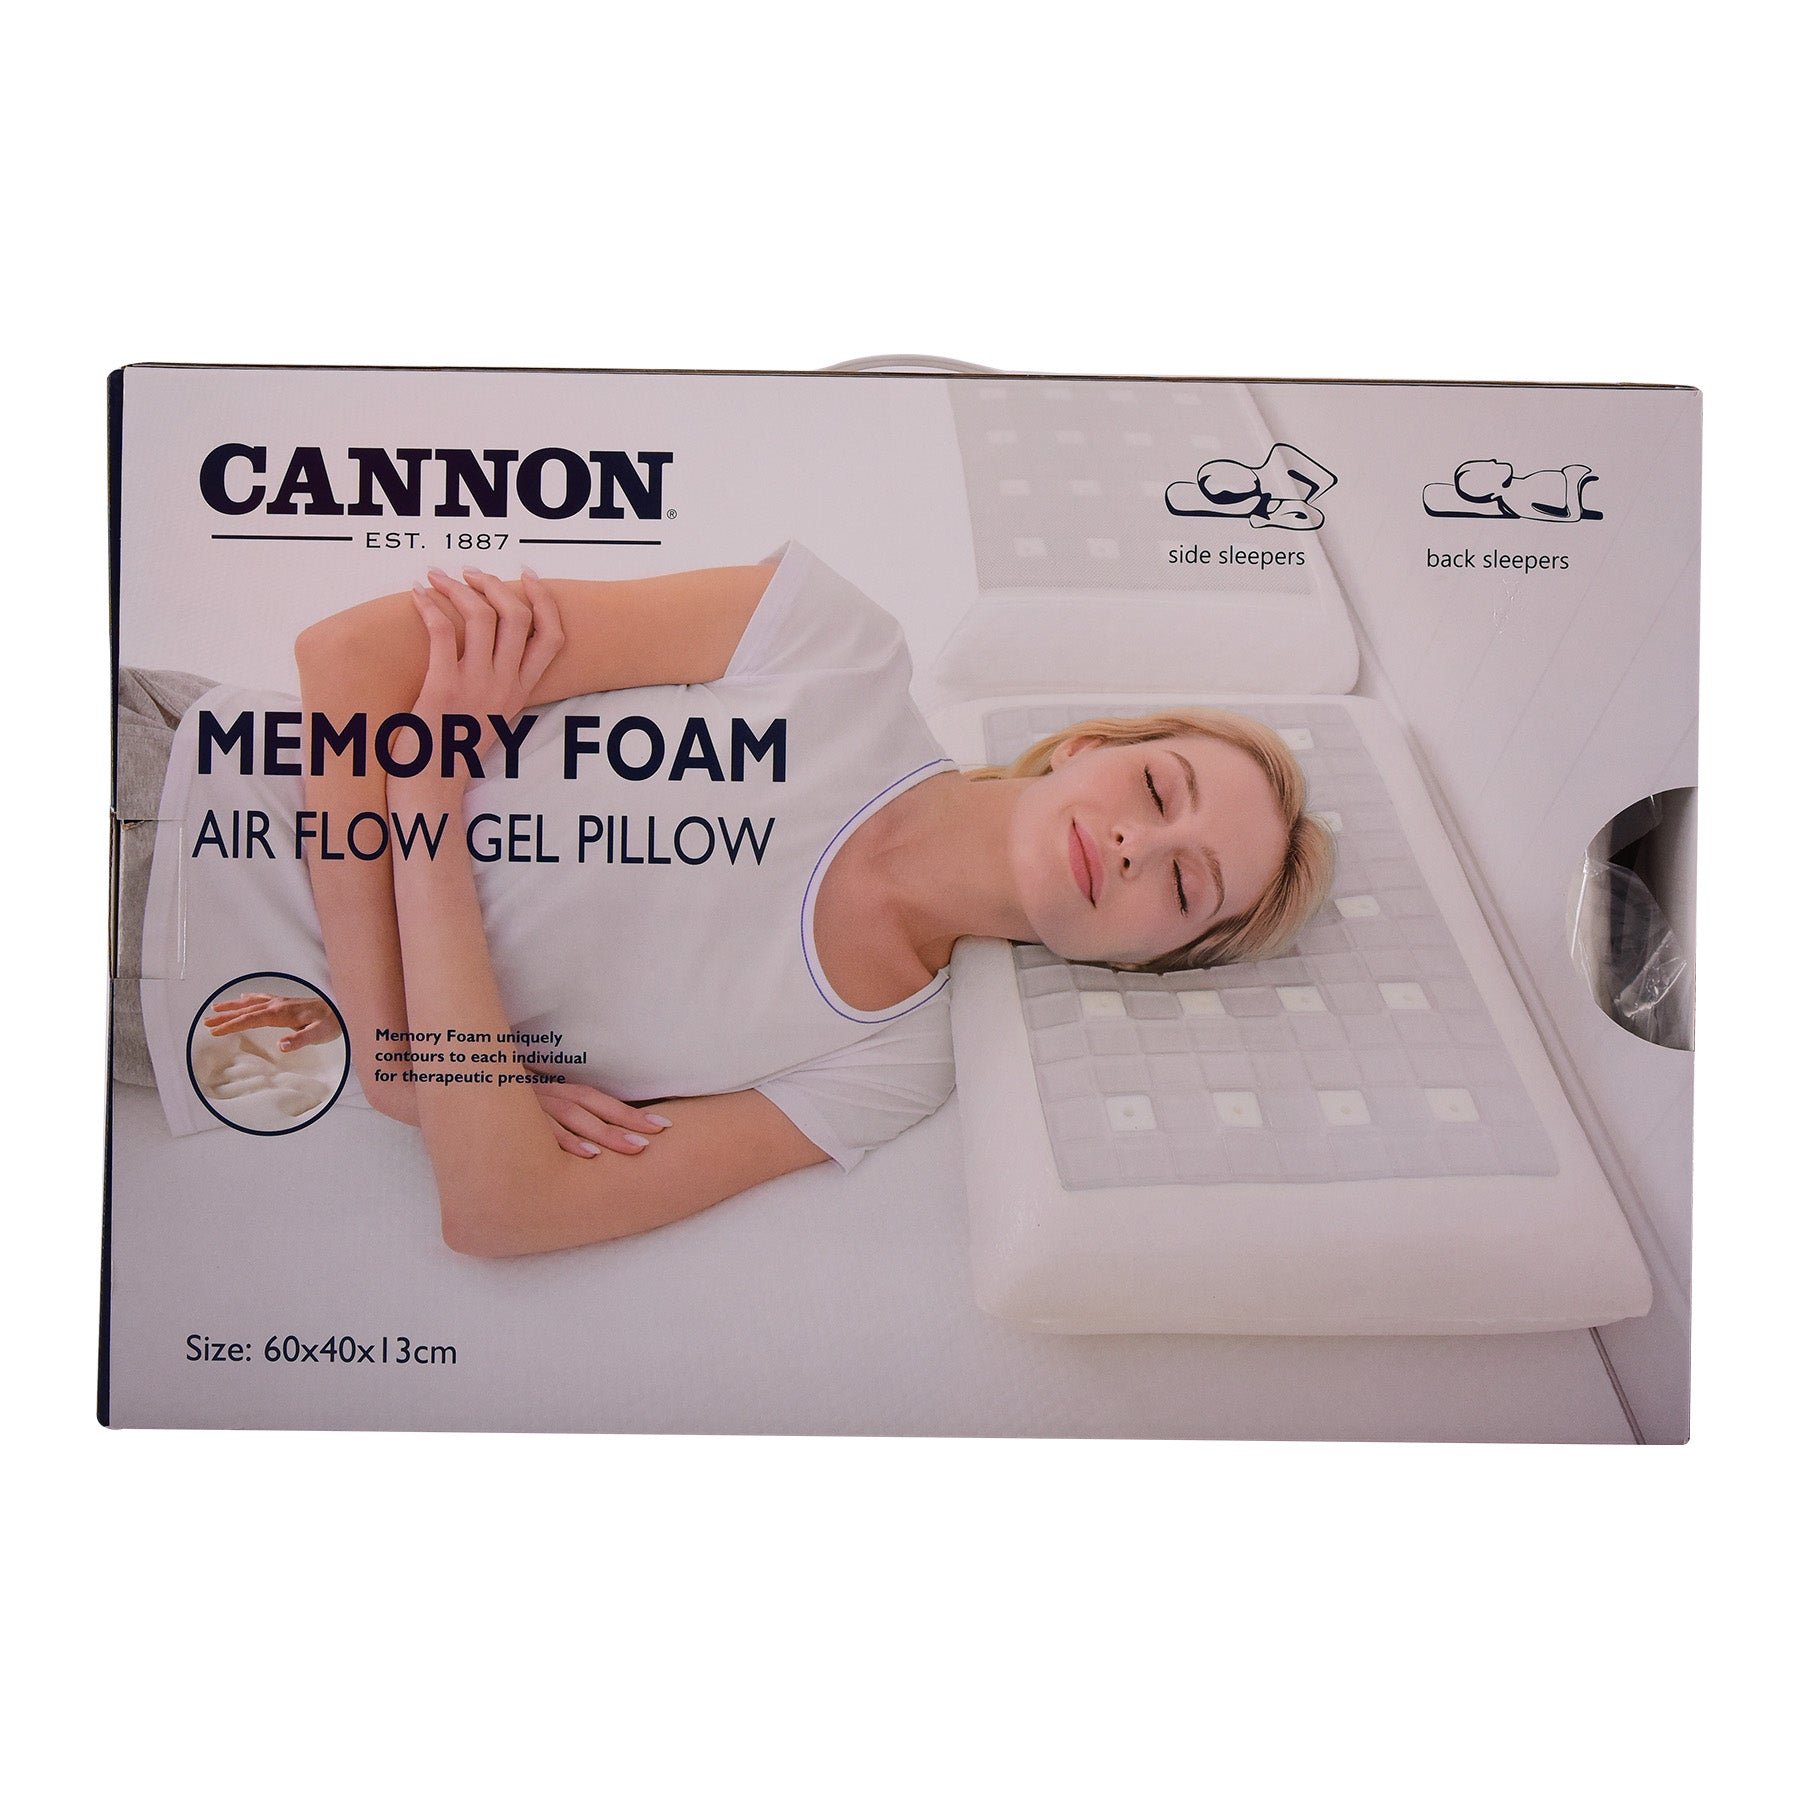 Air Flow Gel Pillow - WhiteSize: 60 x 40 x13 cm